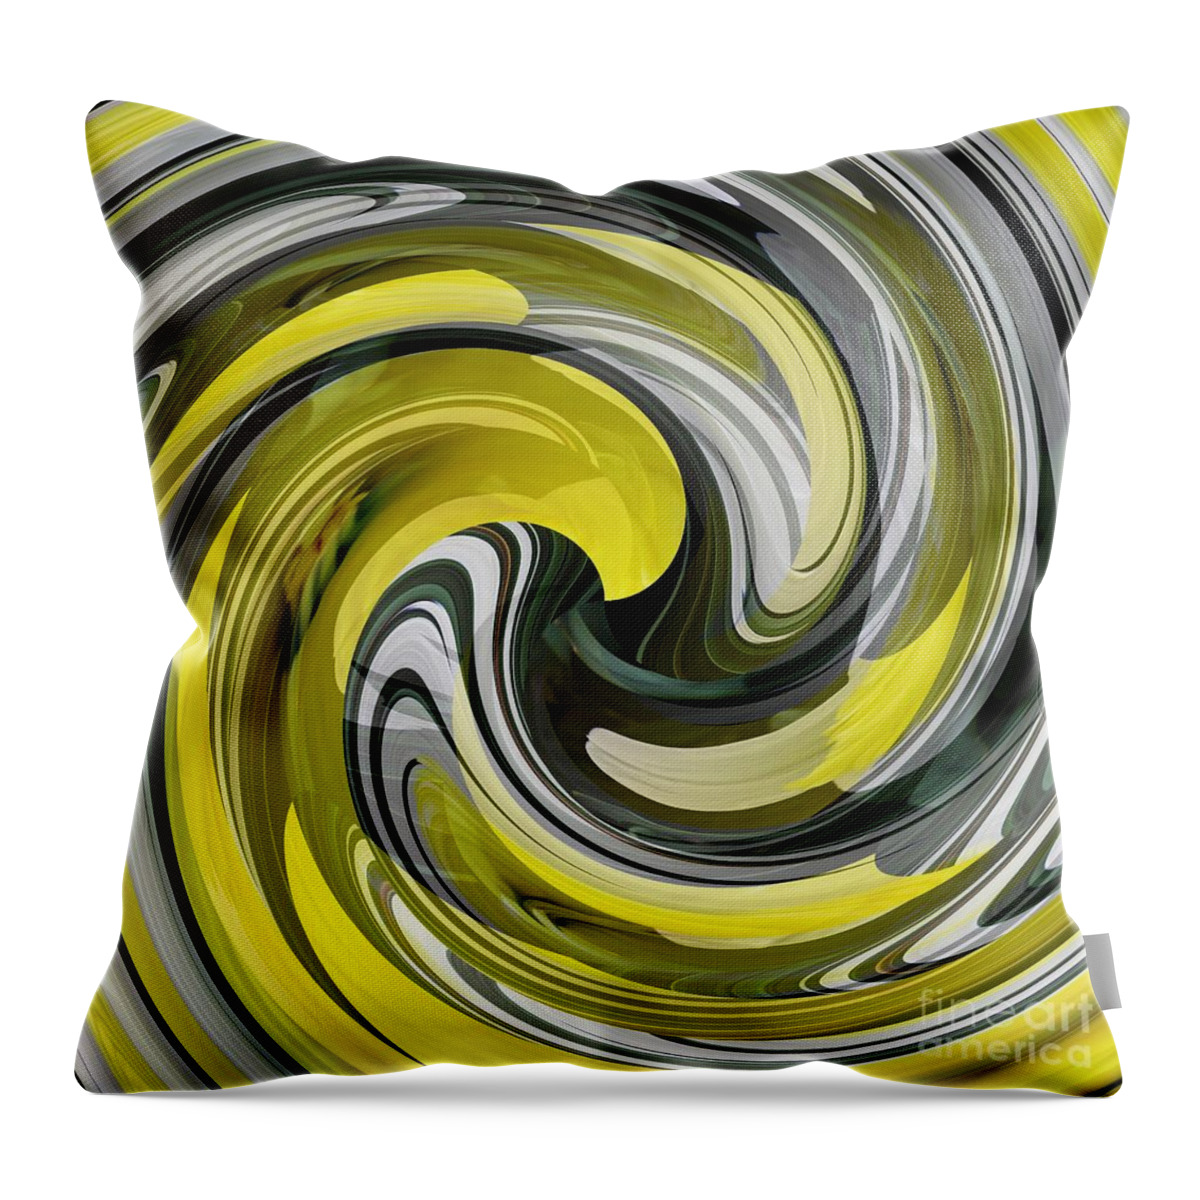 Daffodil Throw Pillow featuring the digital art Daffodil Swirl by Sarah Loft